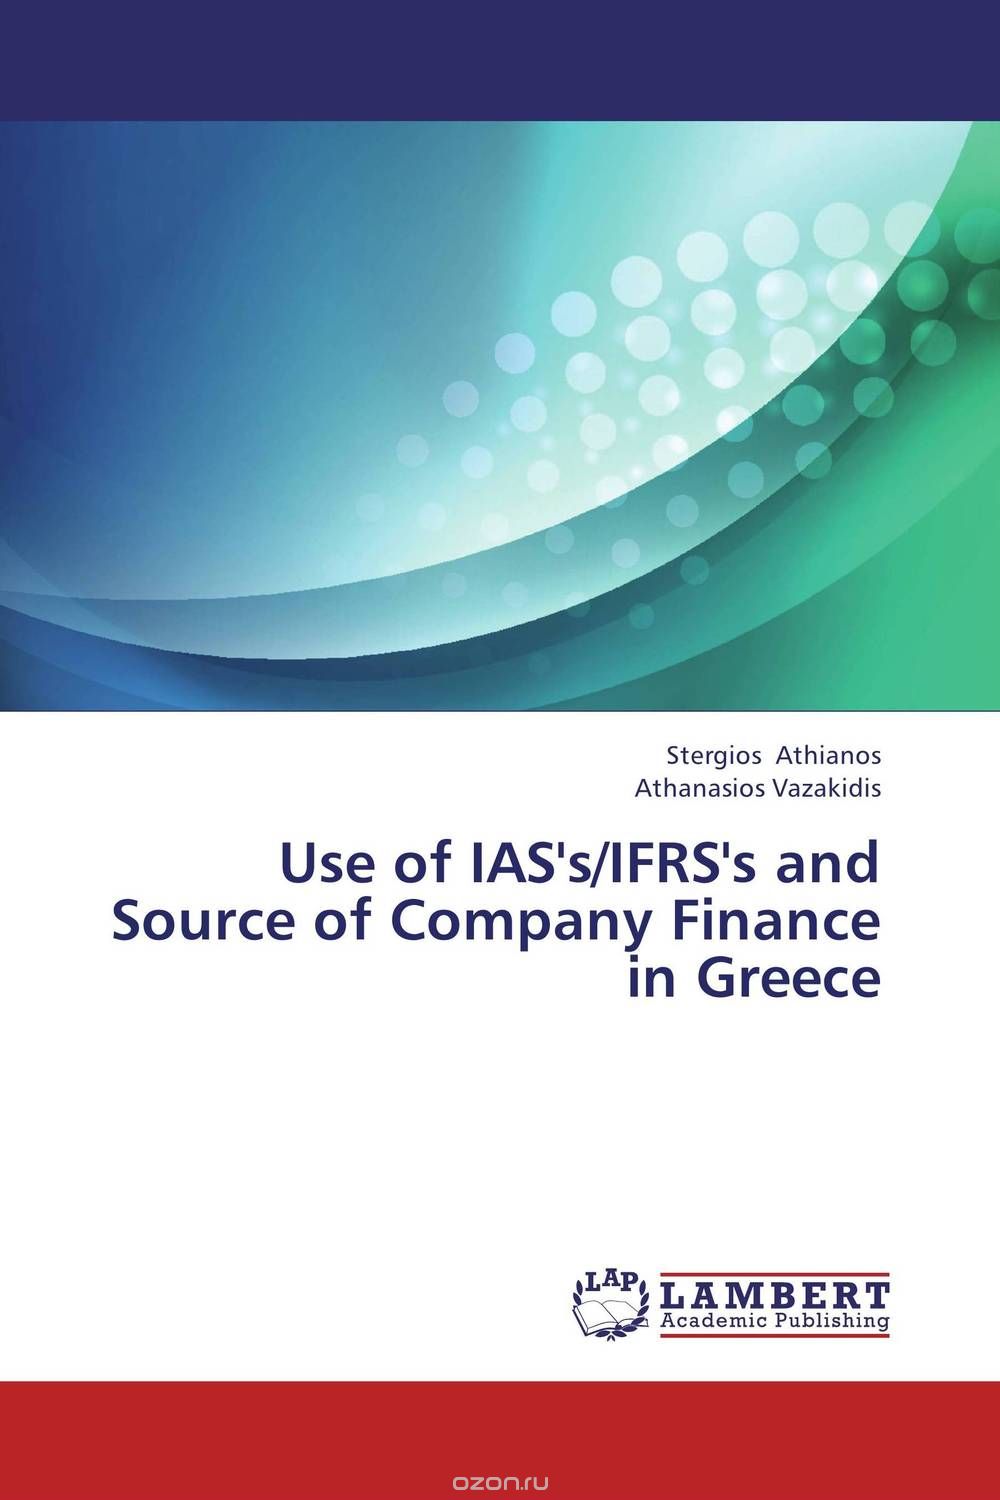 Скачать книгу "Use of IAS's/IFRS's and Source of Company Finance in Greece"